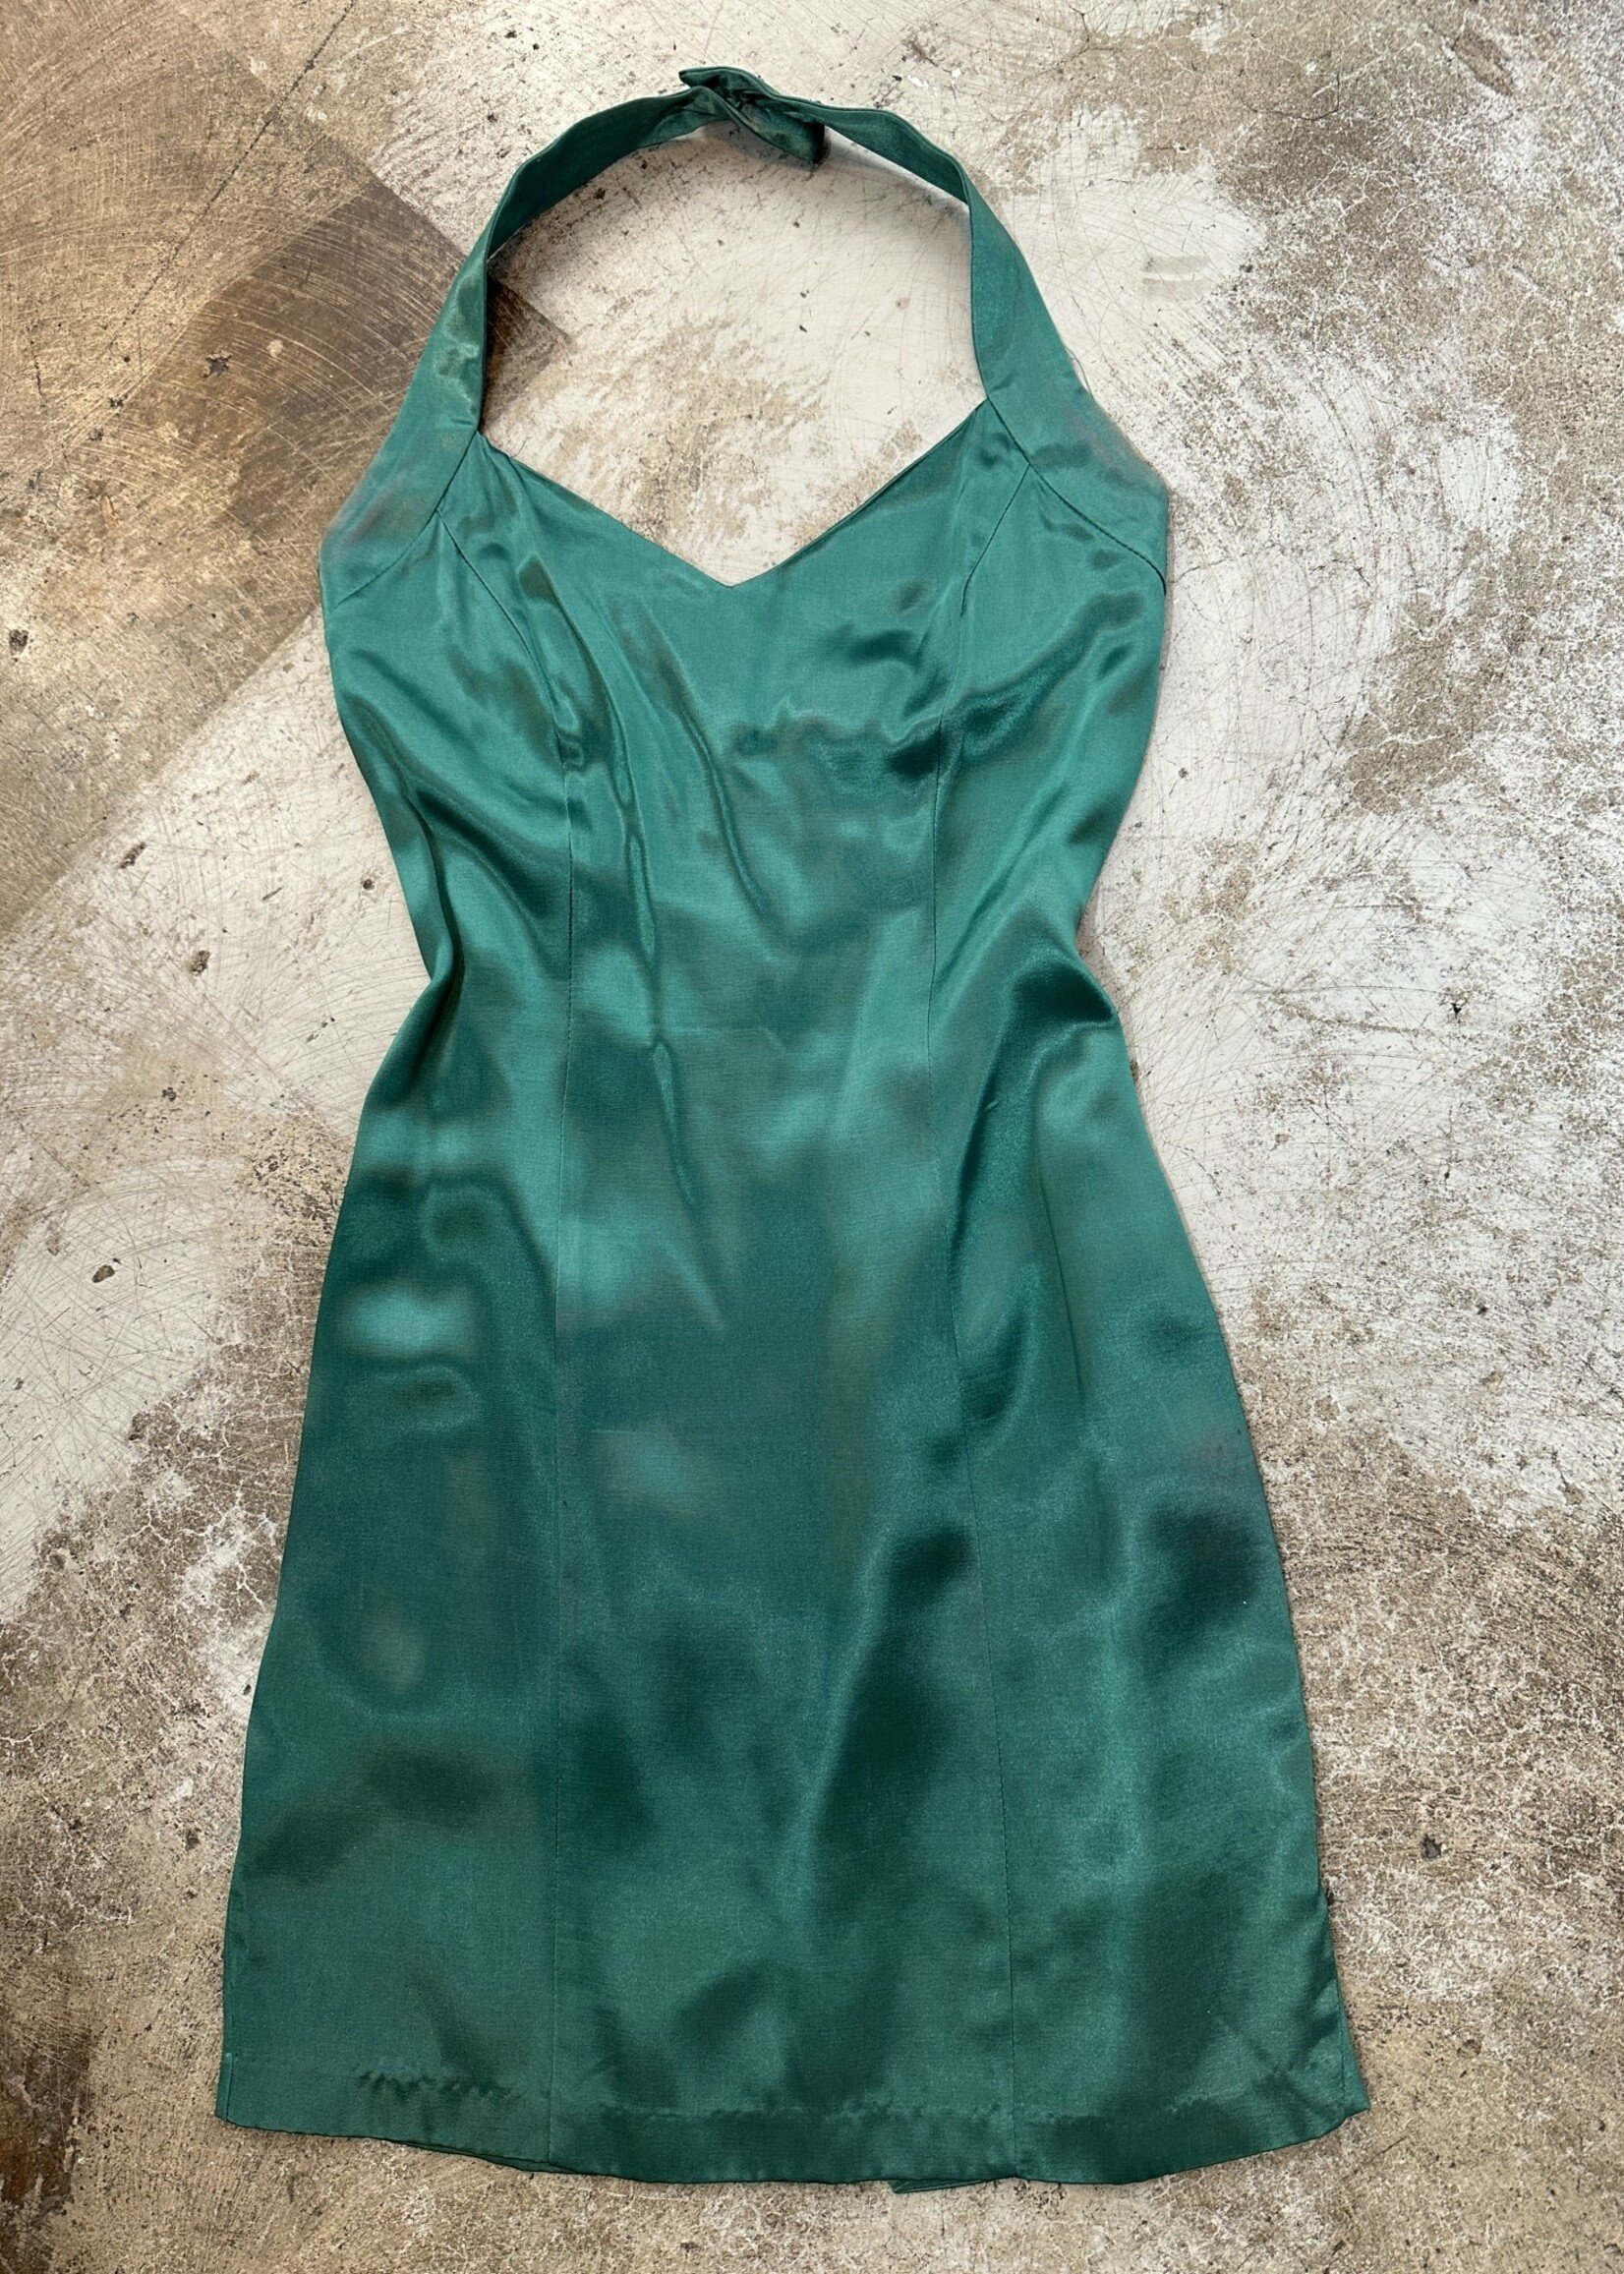 Vintage Blue Green Satin Dress 26"